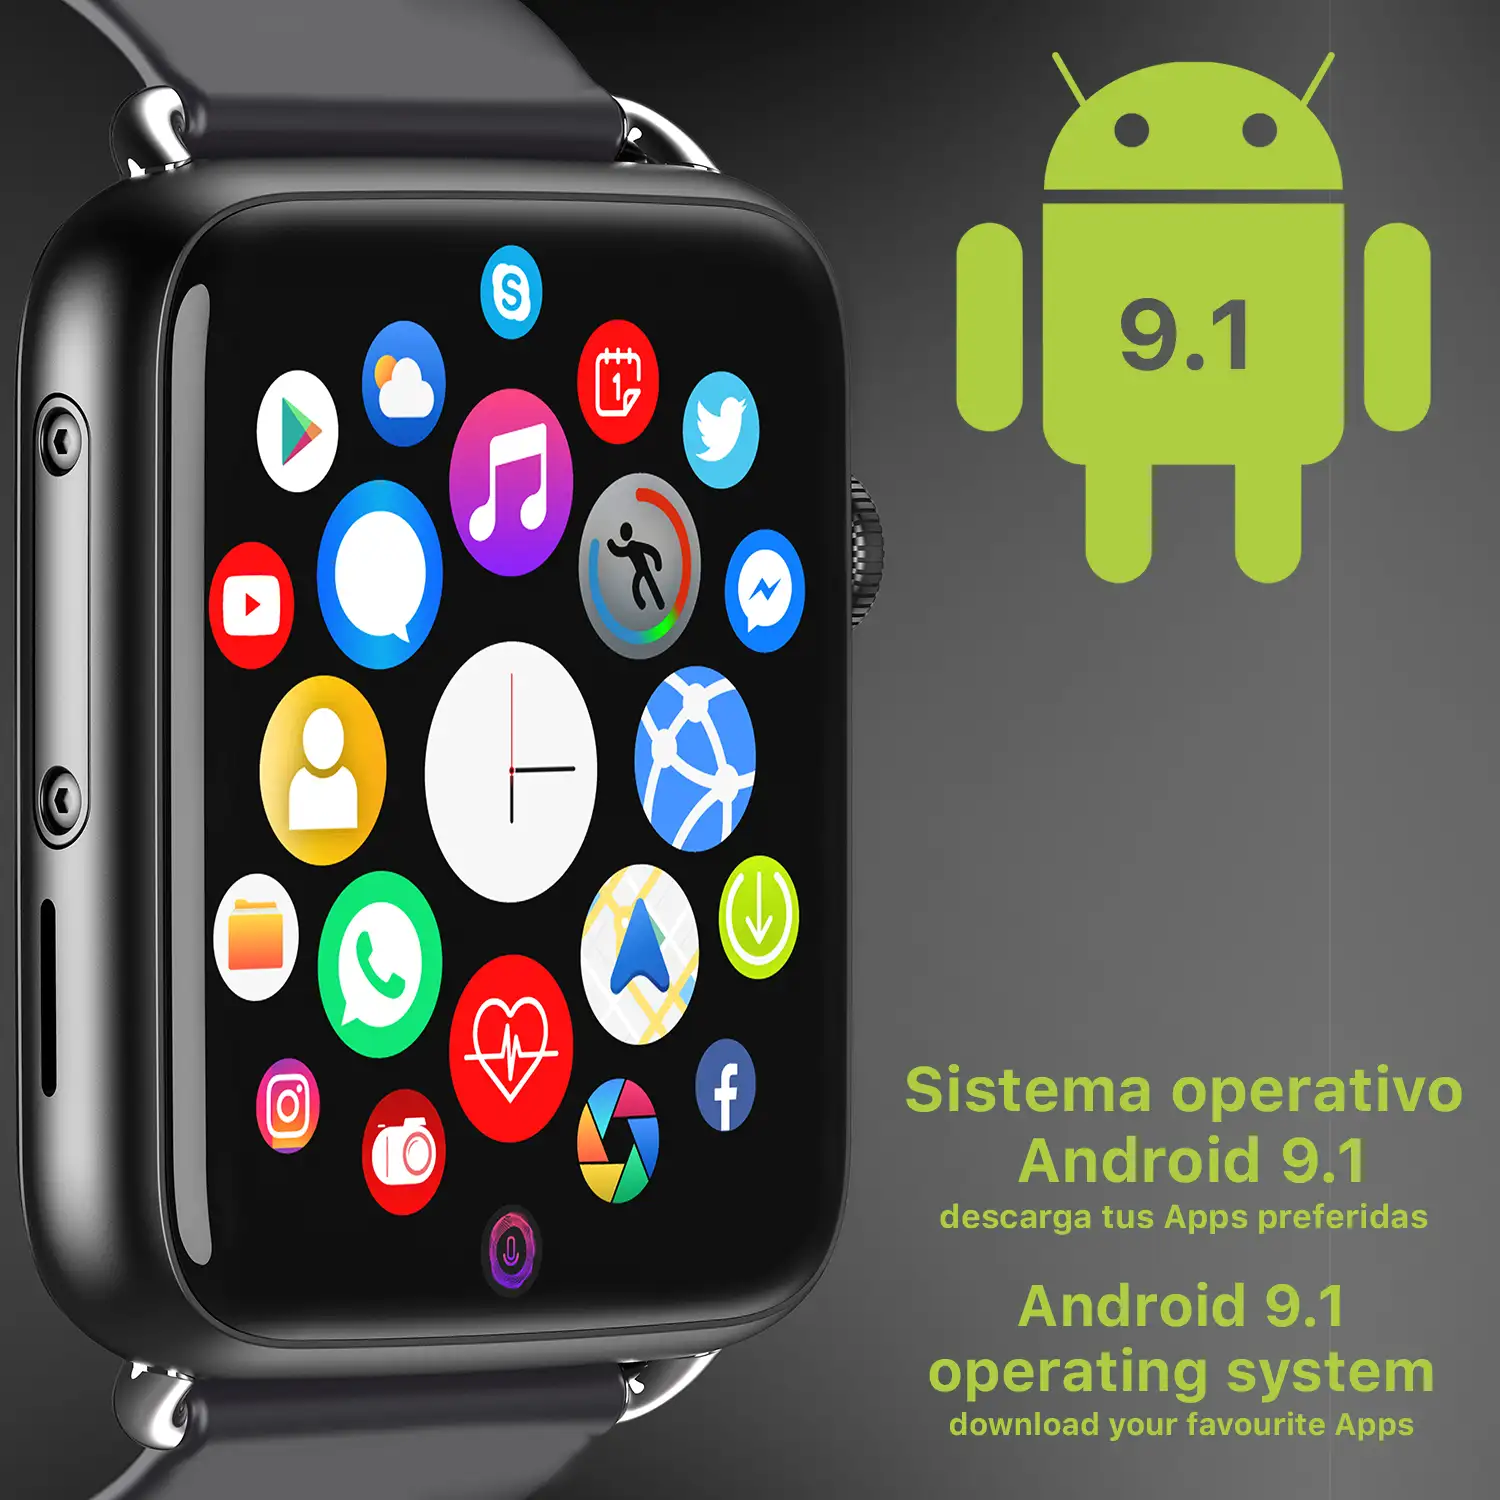 Smartwatch Phone M20-C 4G con SO Android 9.1, Quad Core, Wifi, GPS. Cámara de 5mpx incorporada. 1+16GB de memoria interna.